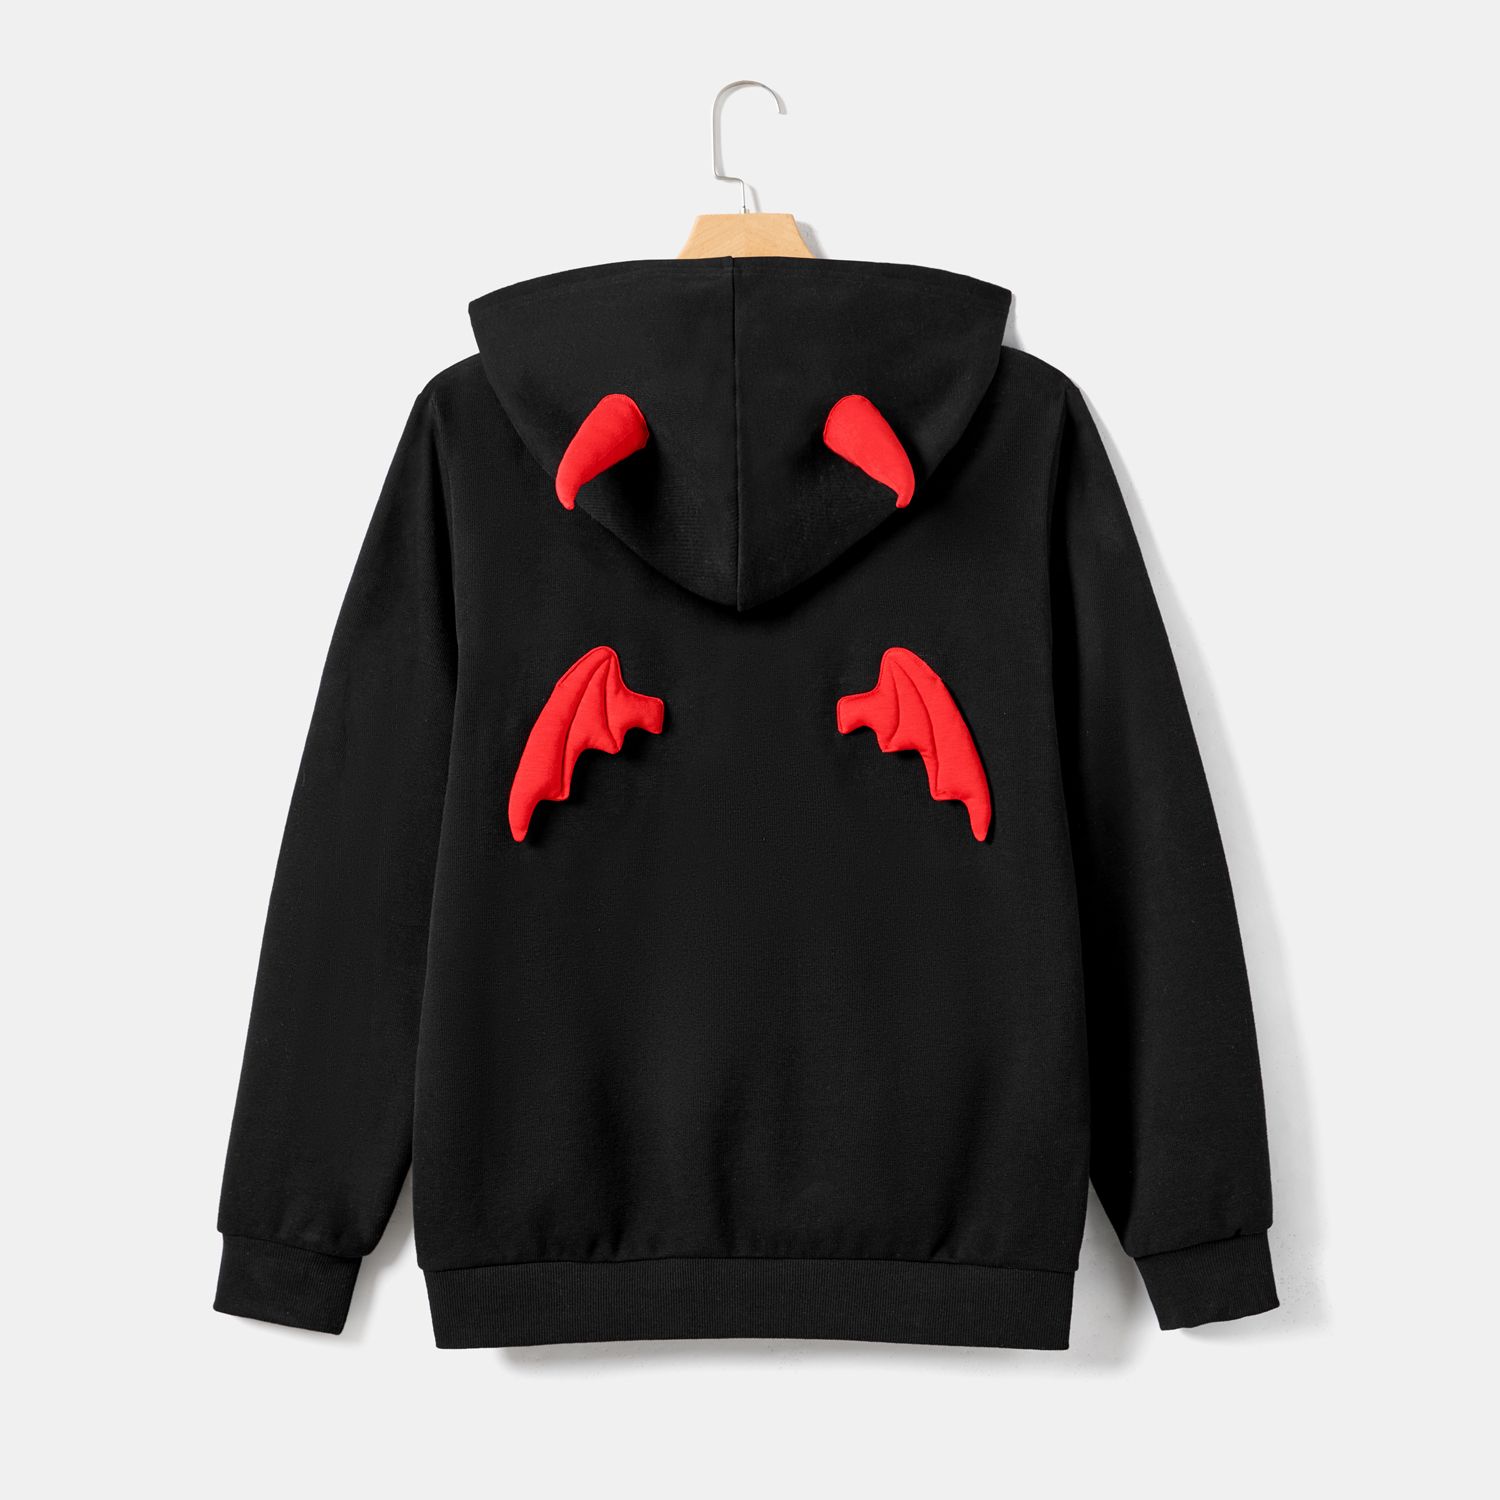 Halloween Family Matching 3D Bat Hooded Long-sleeve Sweatshirt Tops